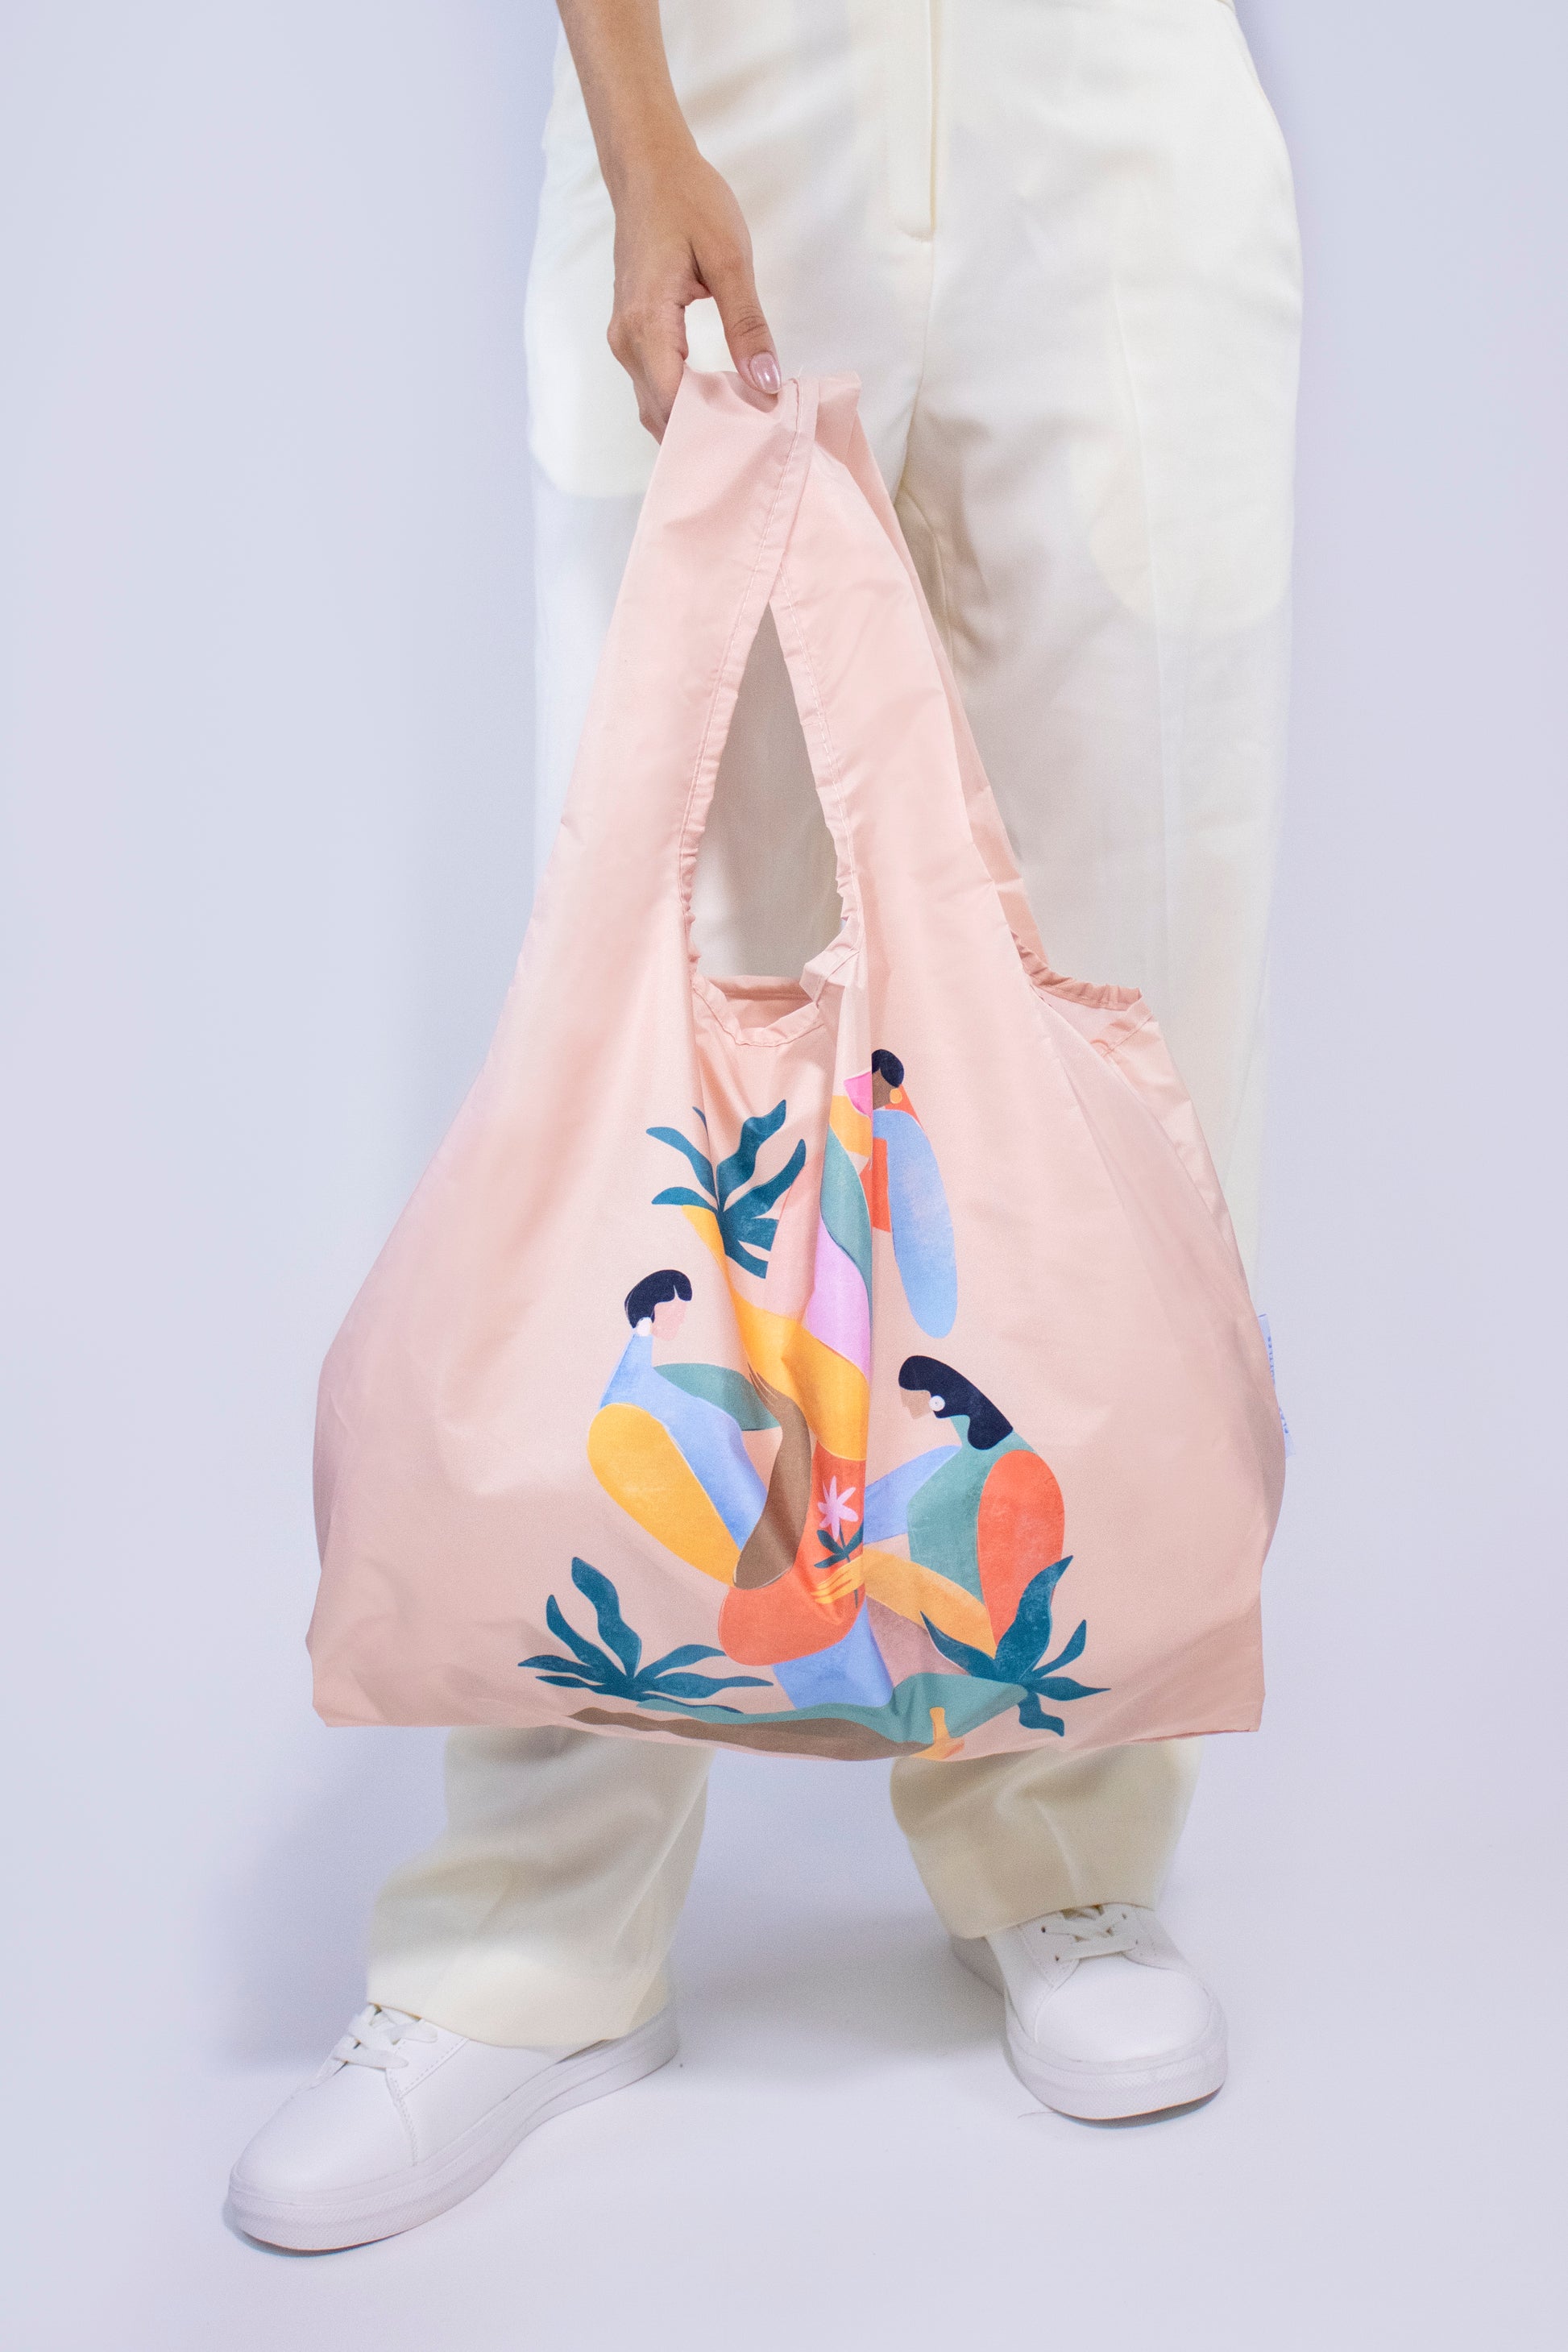 Kind Bag Recycled Plastic Reusable Bag Maggie Stephenson Summer Afternoon Singapore